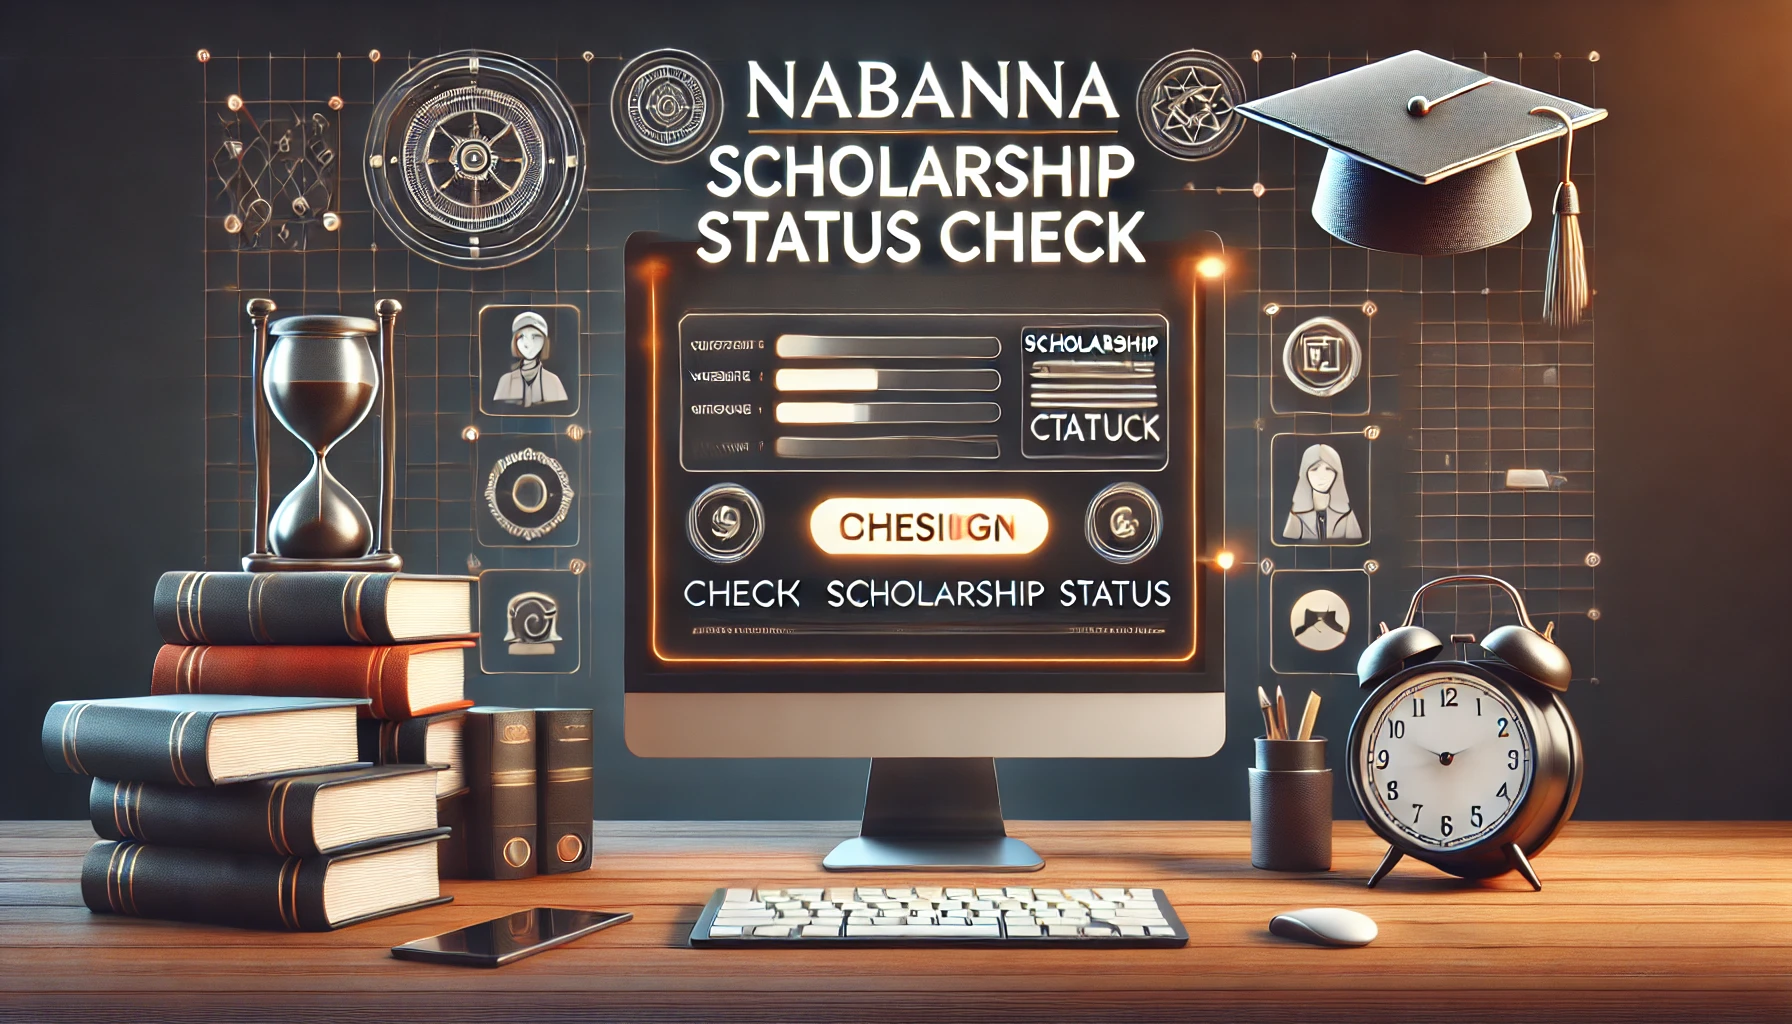 Nabanna Scholarship Status Check